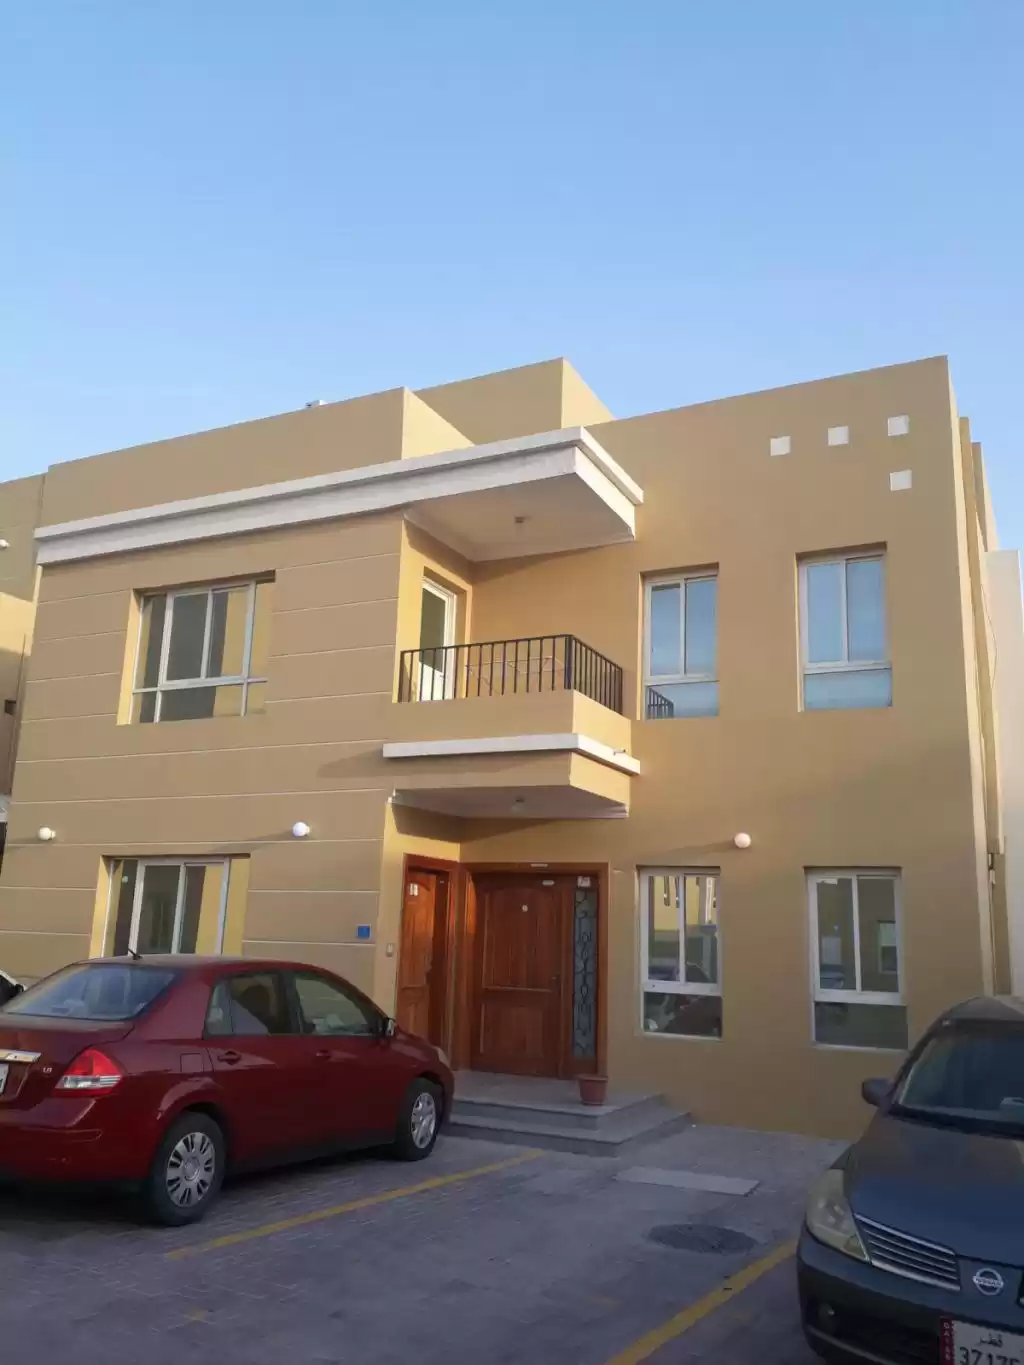 Résidentiel Propriété prête Studio U / f Appartement  a louer au Al-Sadd , Doha #17201 - 1  image 